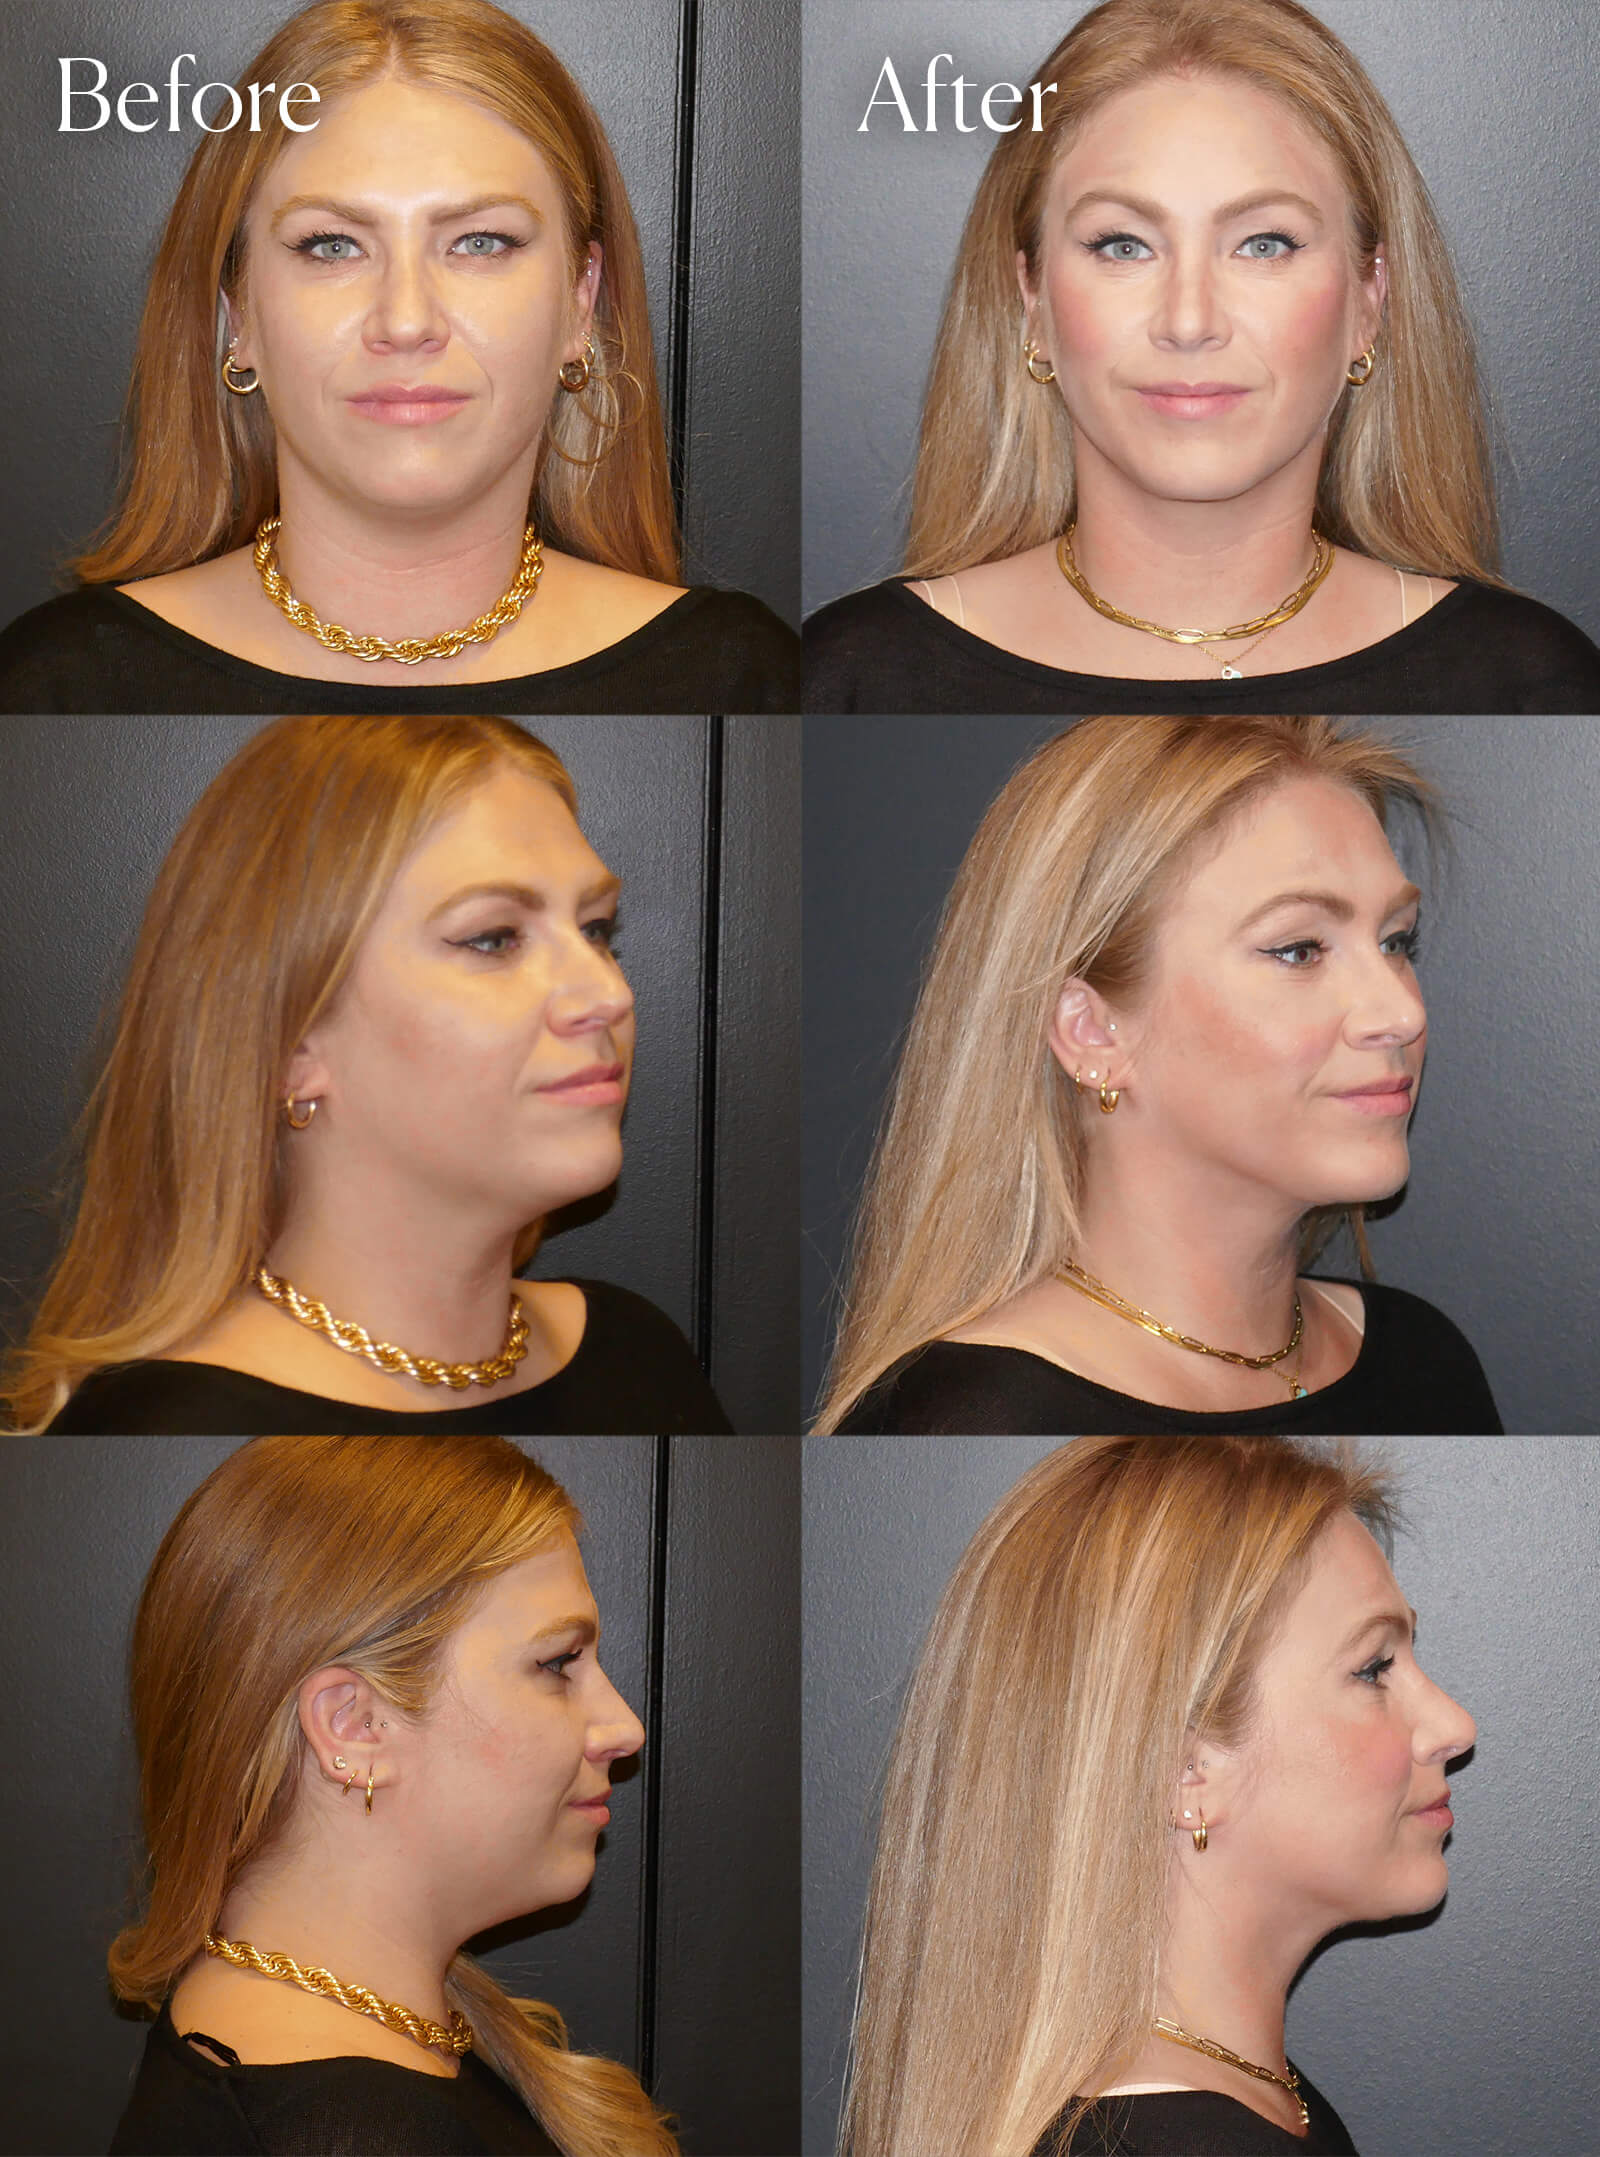 ultralift necklift chin implant browlift rhinoplasty